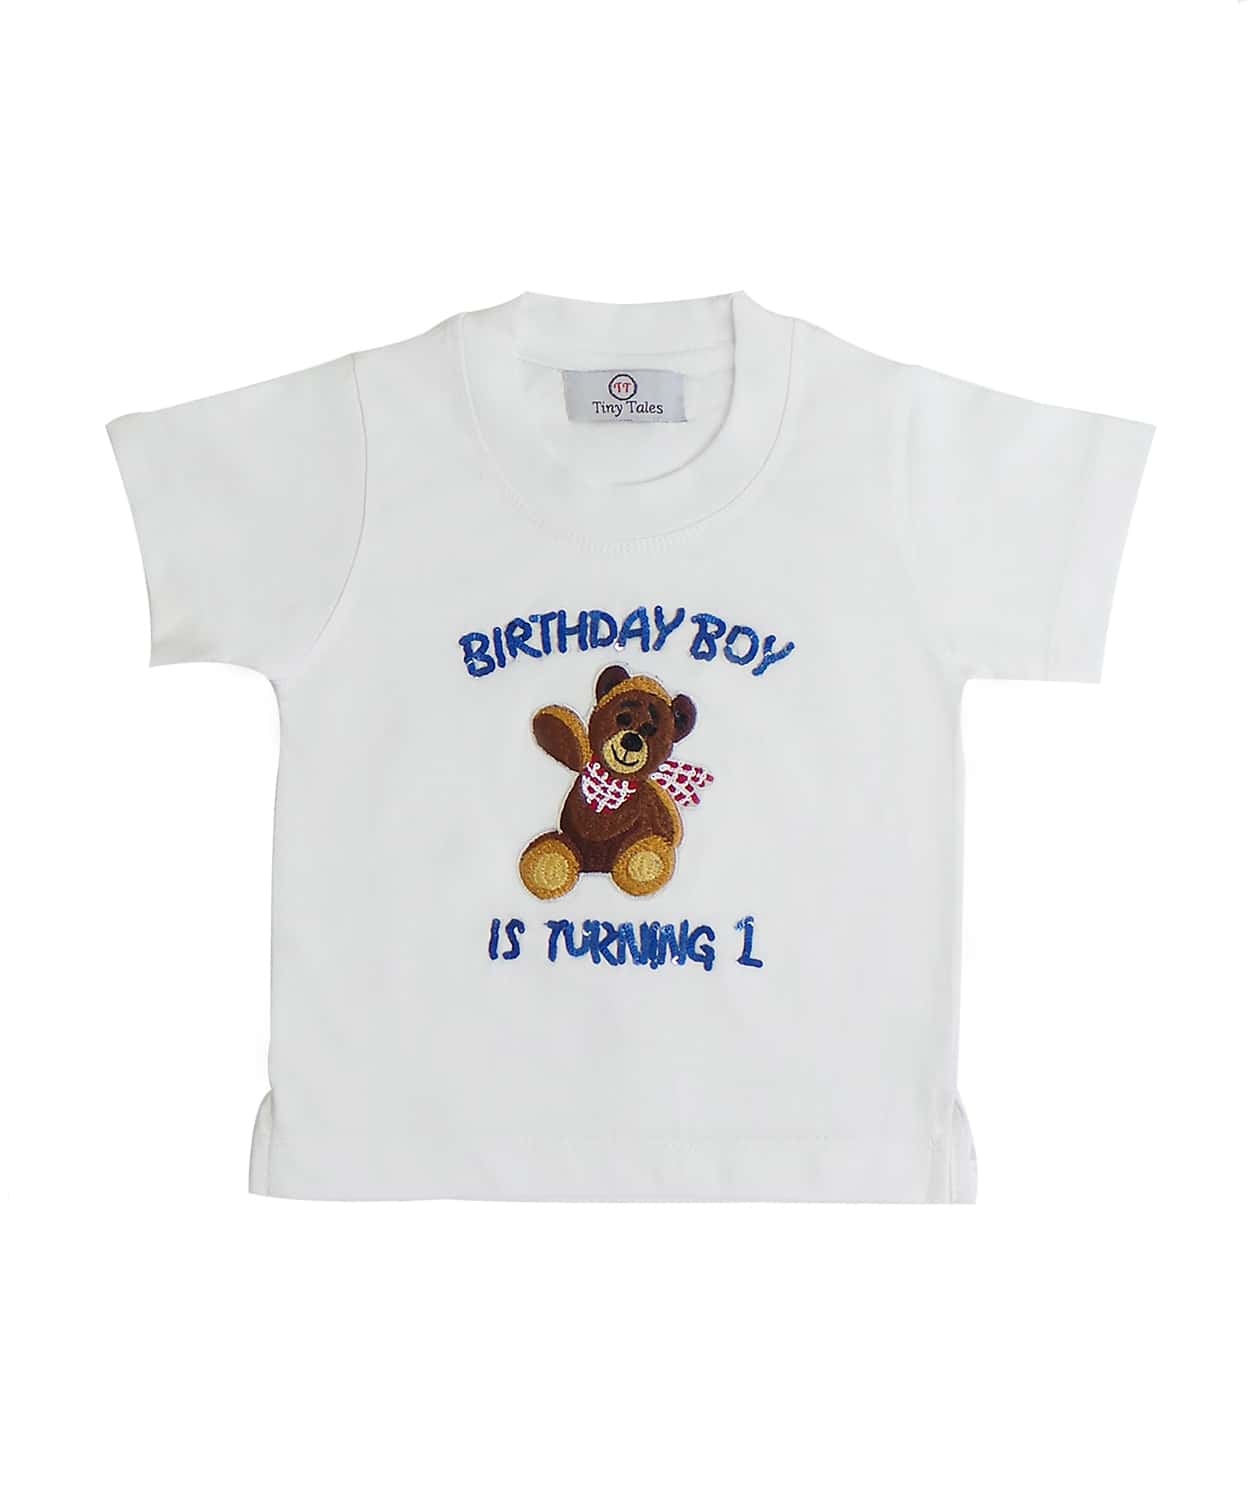 Unisex Personalized Birthday T-shirt